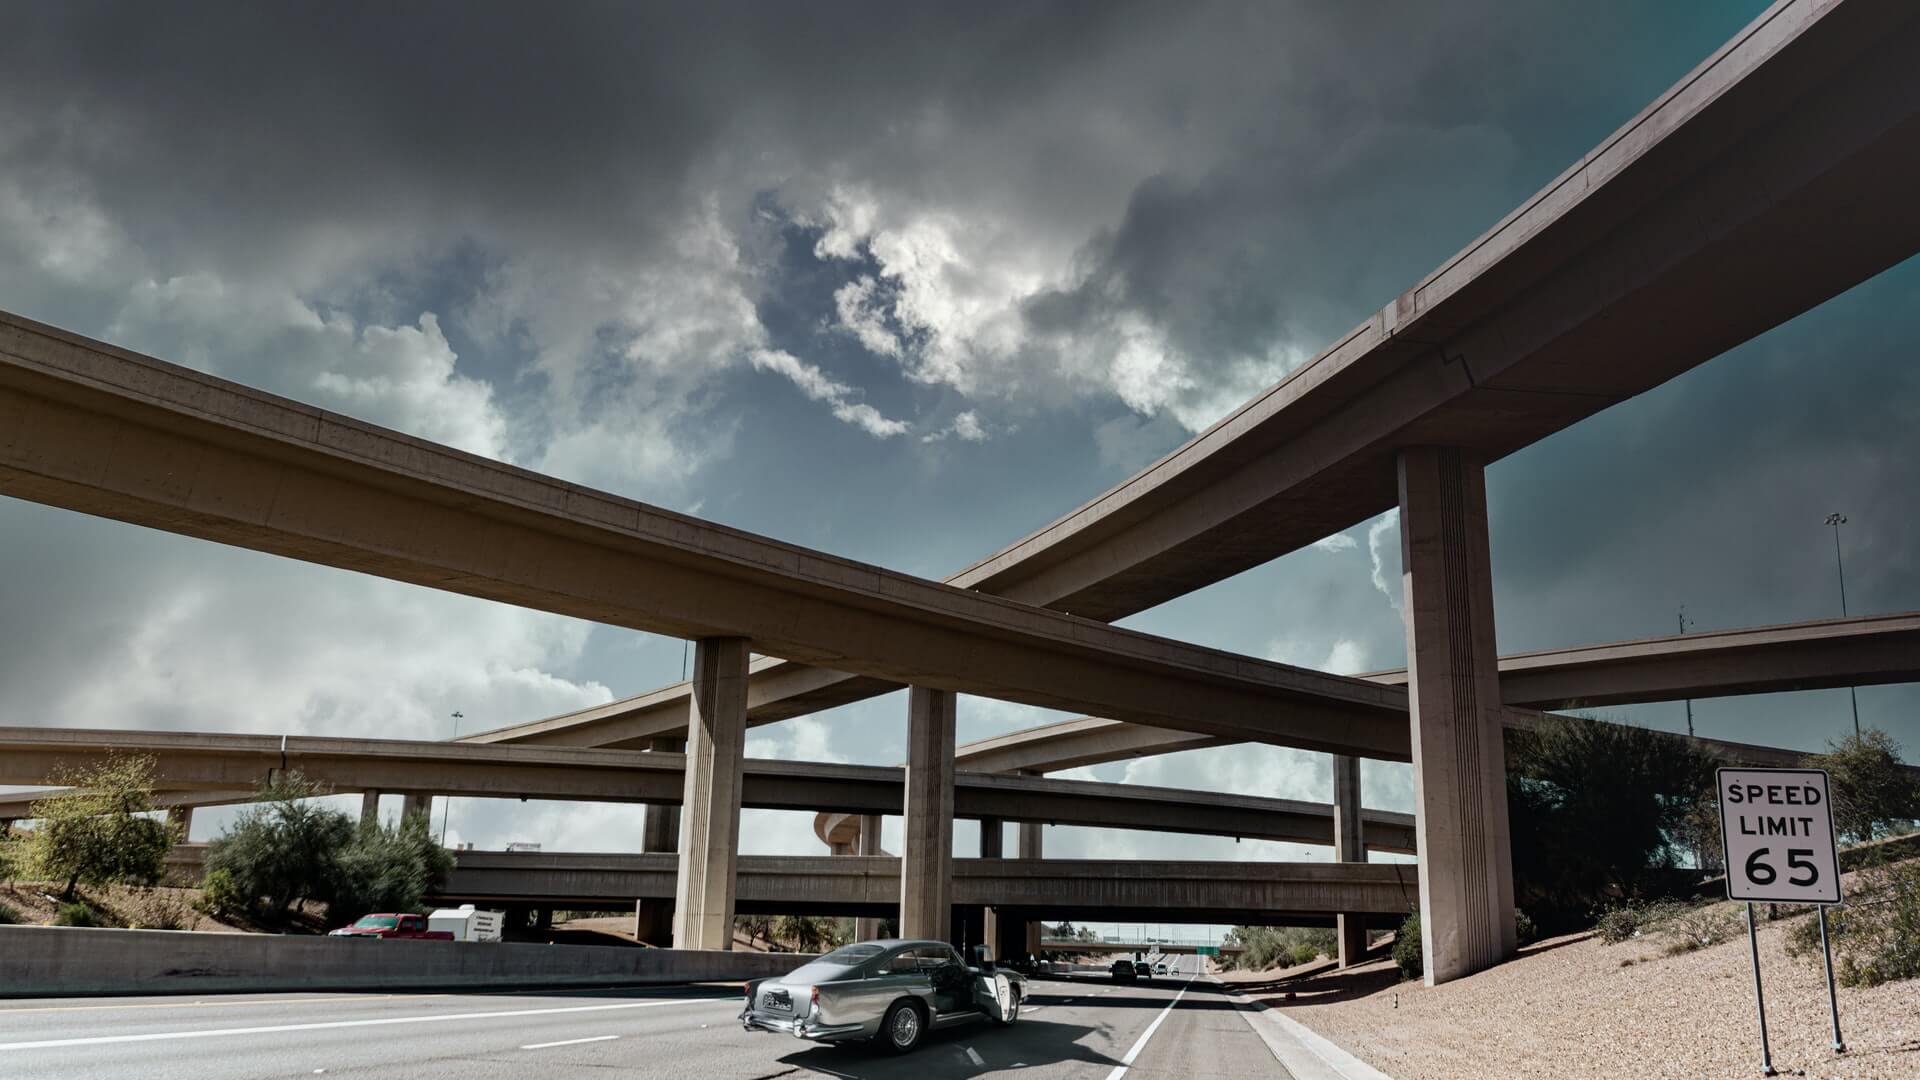 Aston Martin DB5 on freeway in Phoenix, Arizona